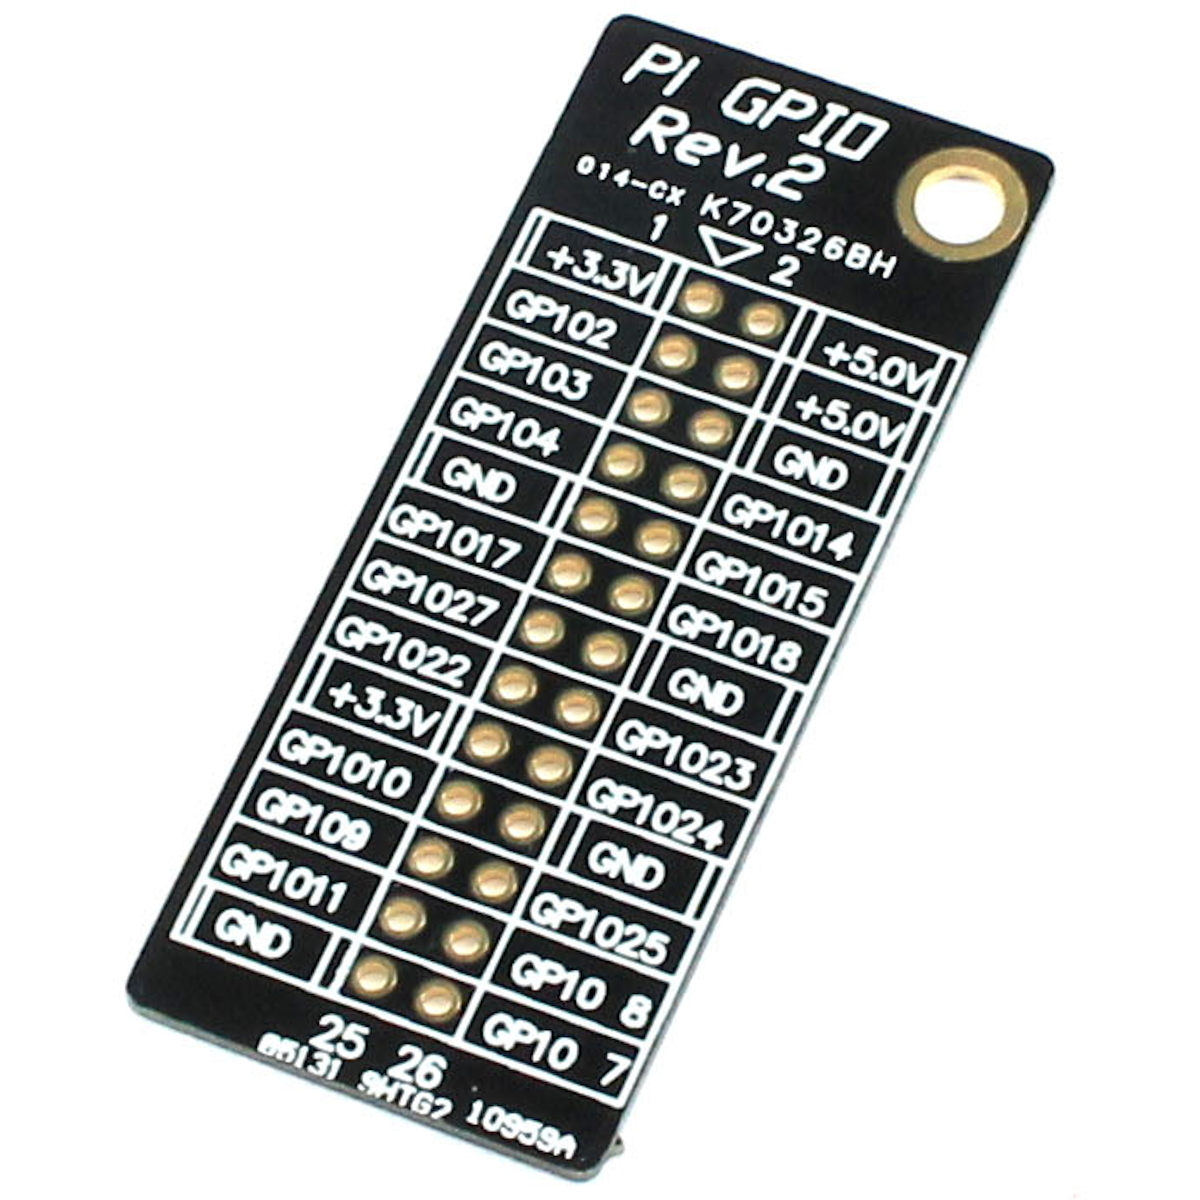 Raspberry Pi GPIO Ref Image 1